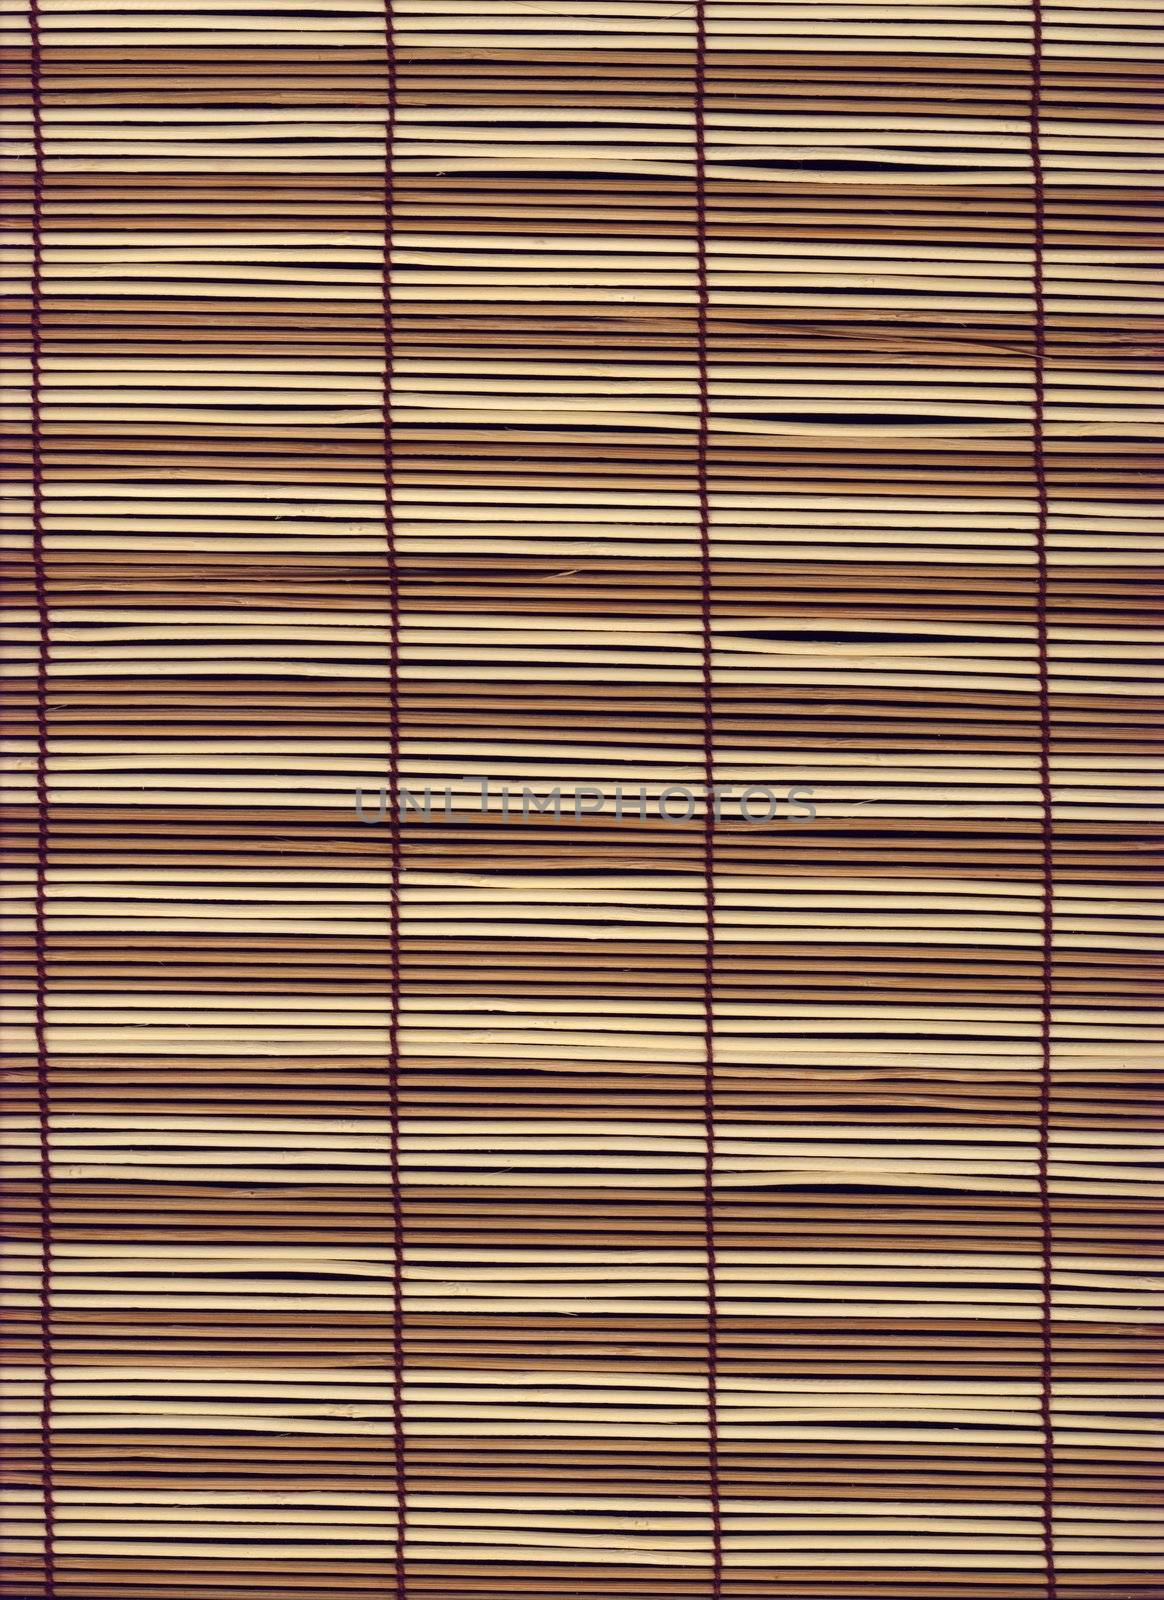 Photo of a wooden mat by pzaxe